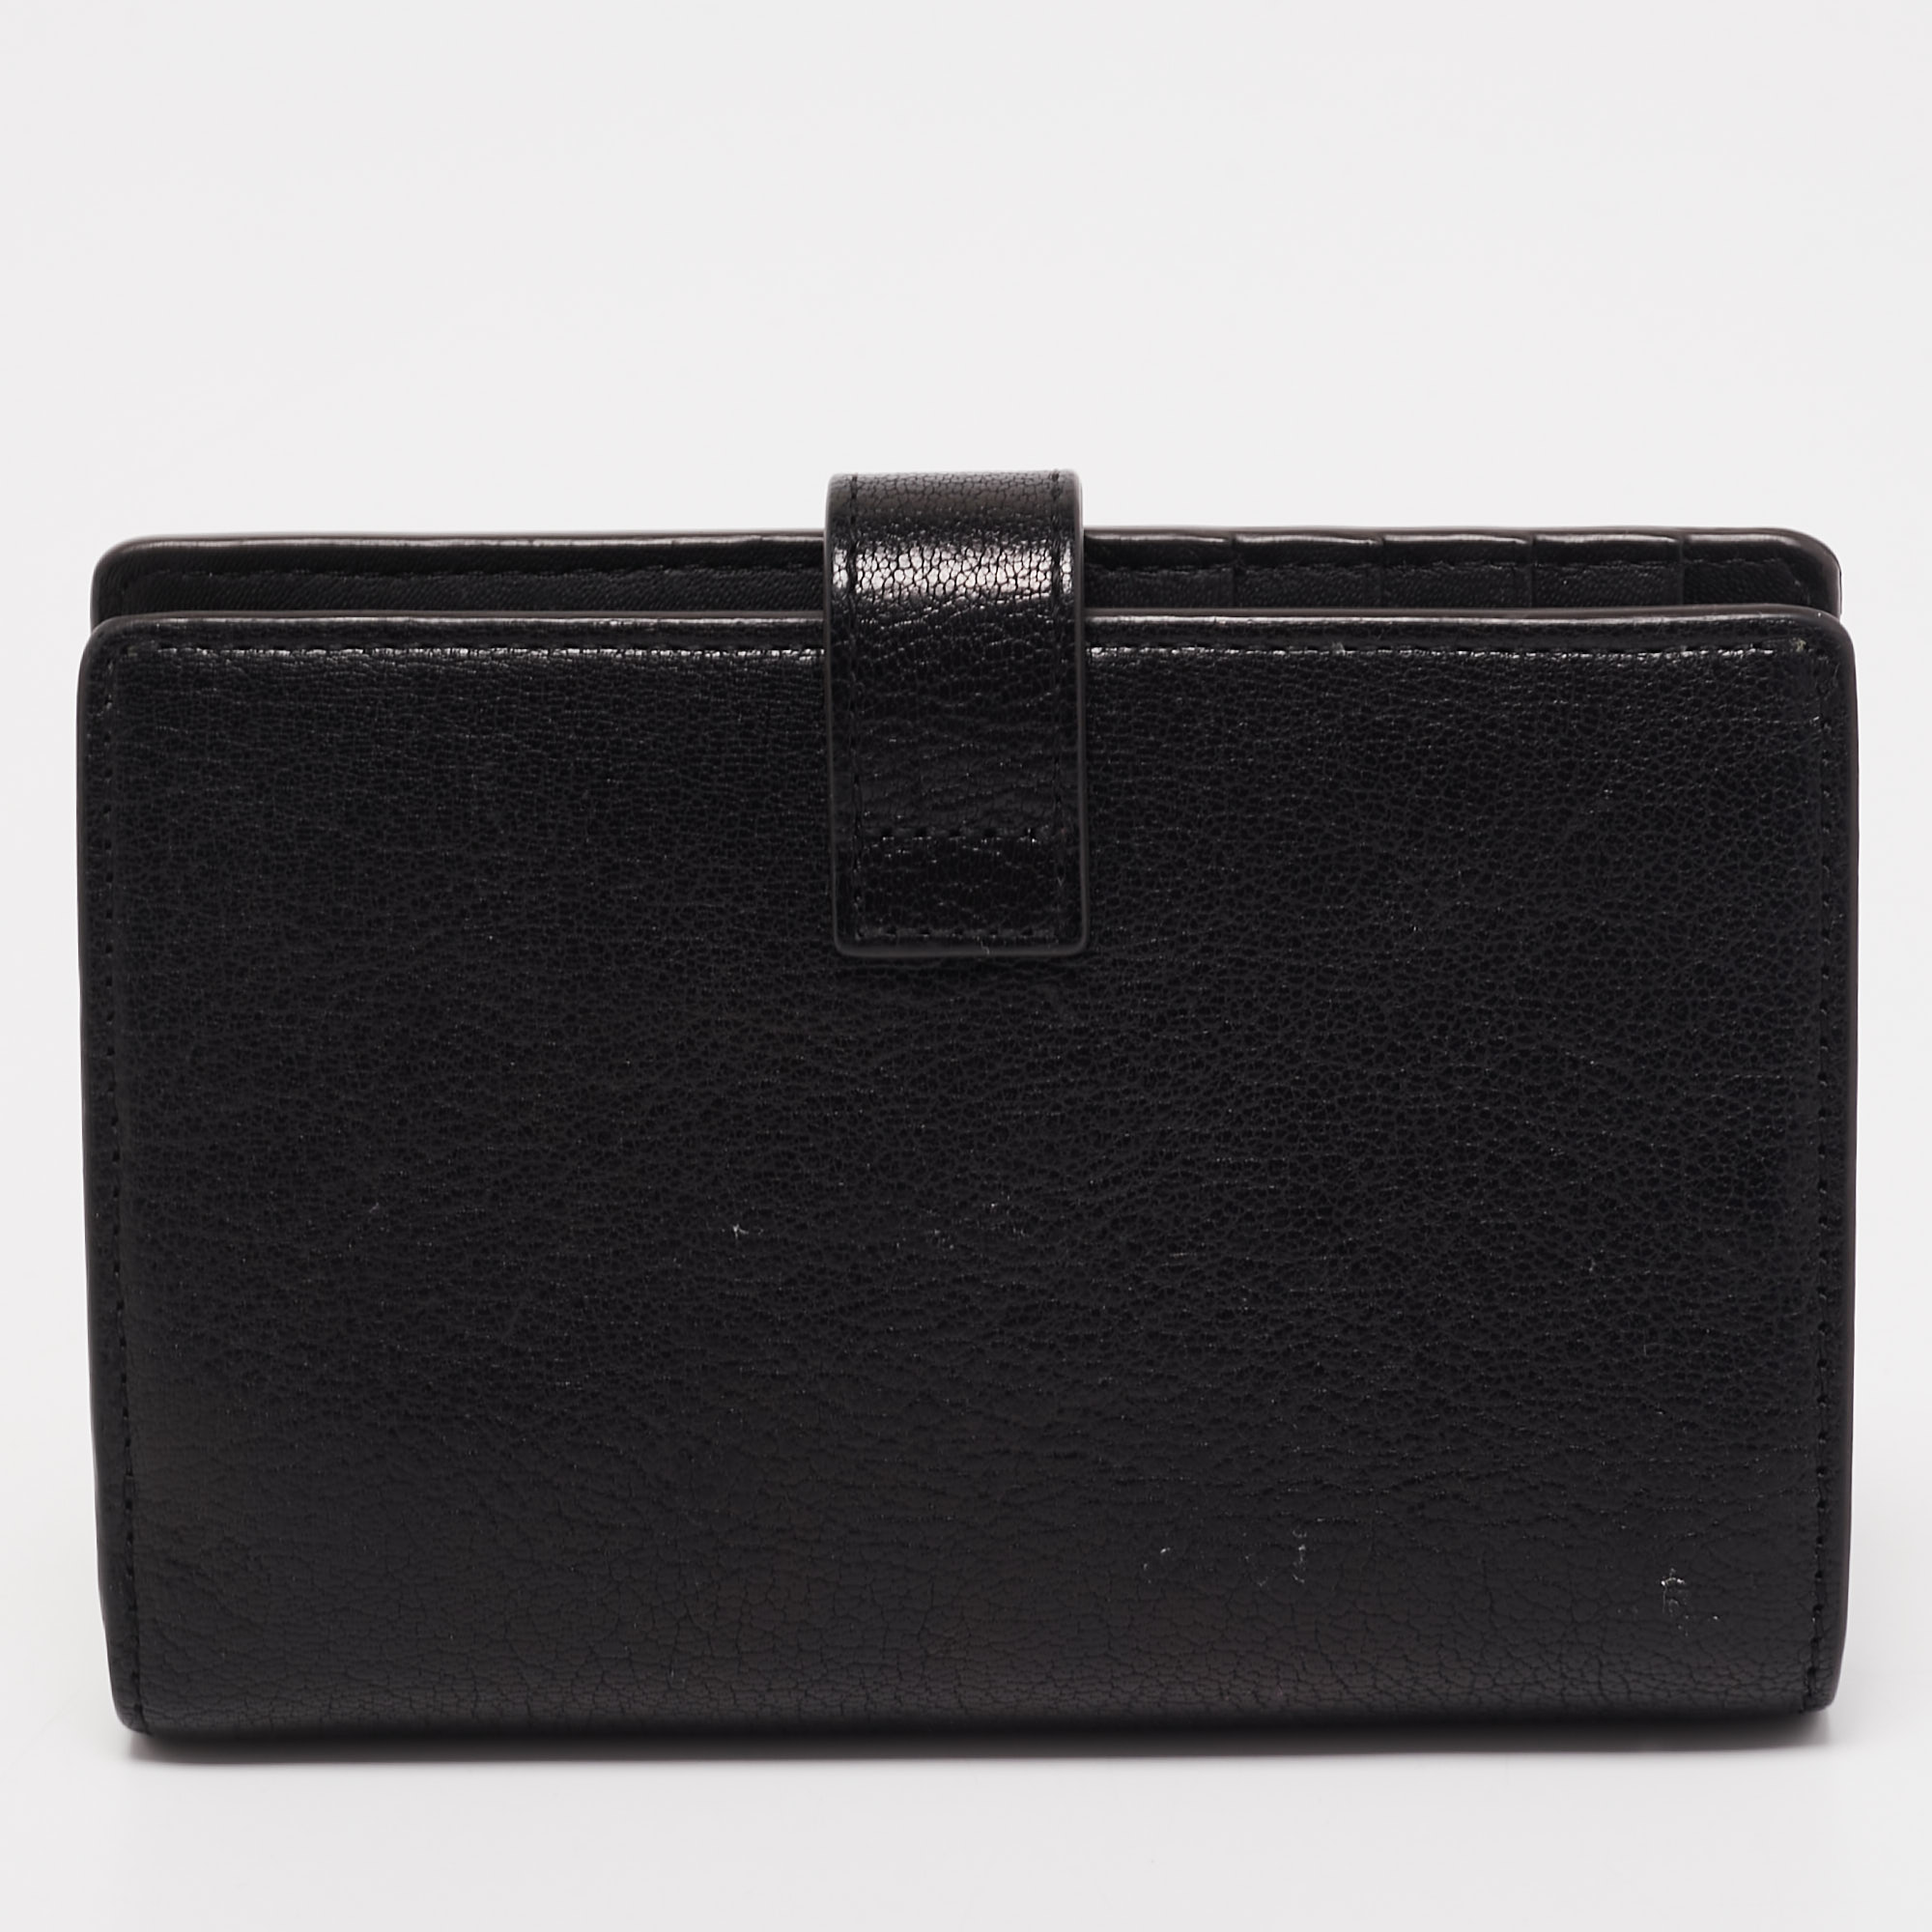 Furla Black Leather Stud Flap Compact Wallet